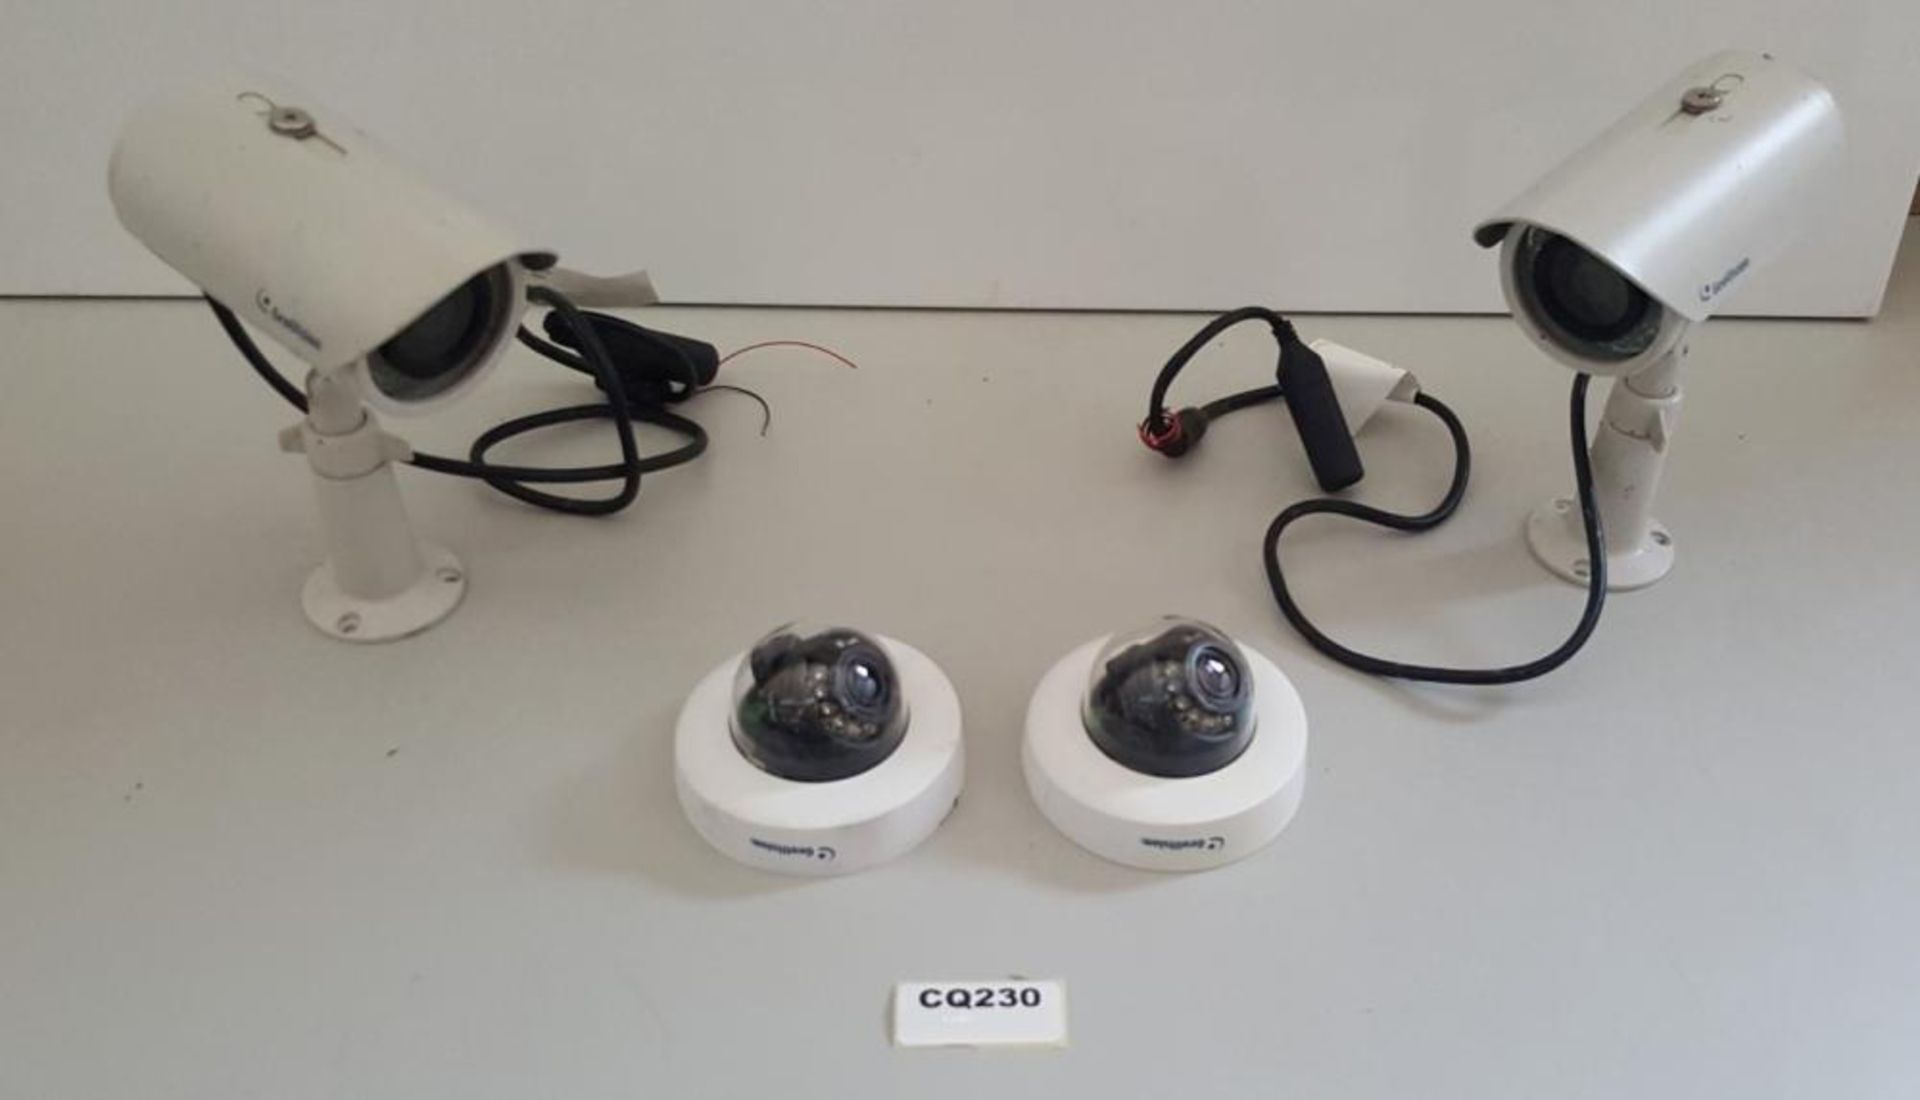 4 x Geovision Security Cameras (2 x GV-EFD1100, 2 x GV-EBL1100) - Ref CQ230/K2 - CL379 - Location: A